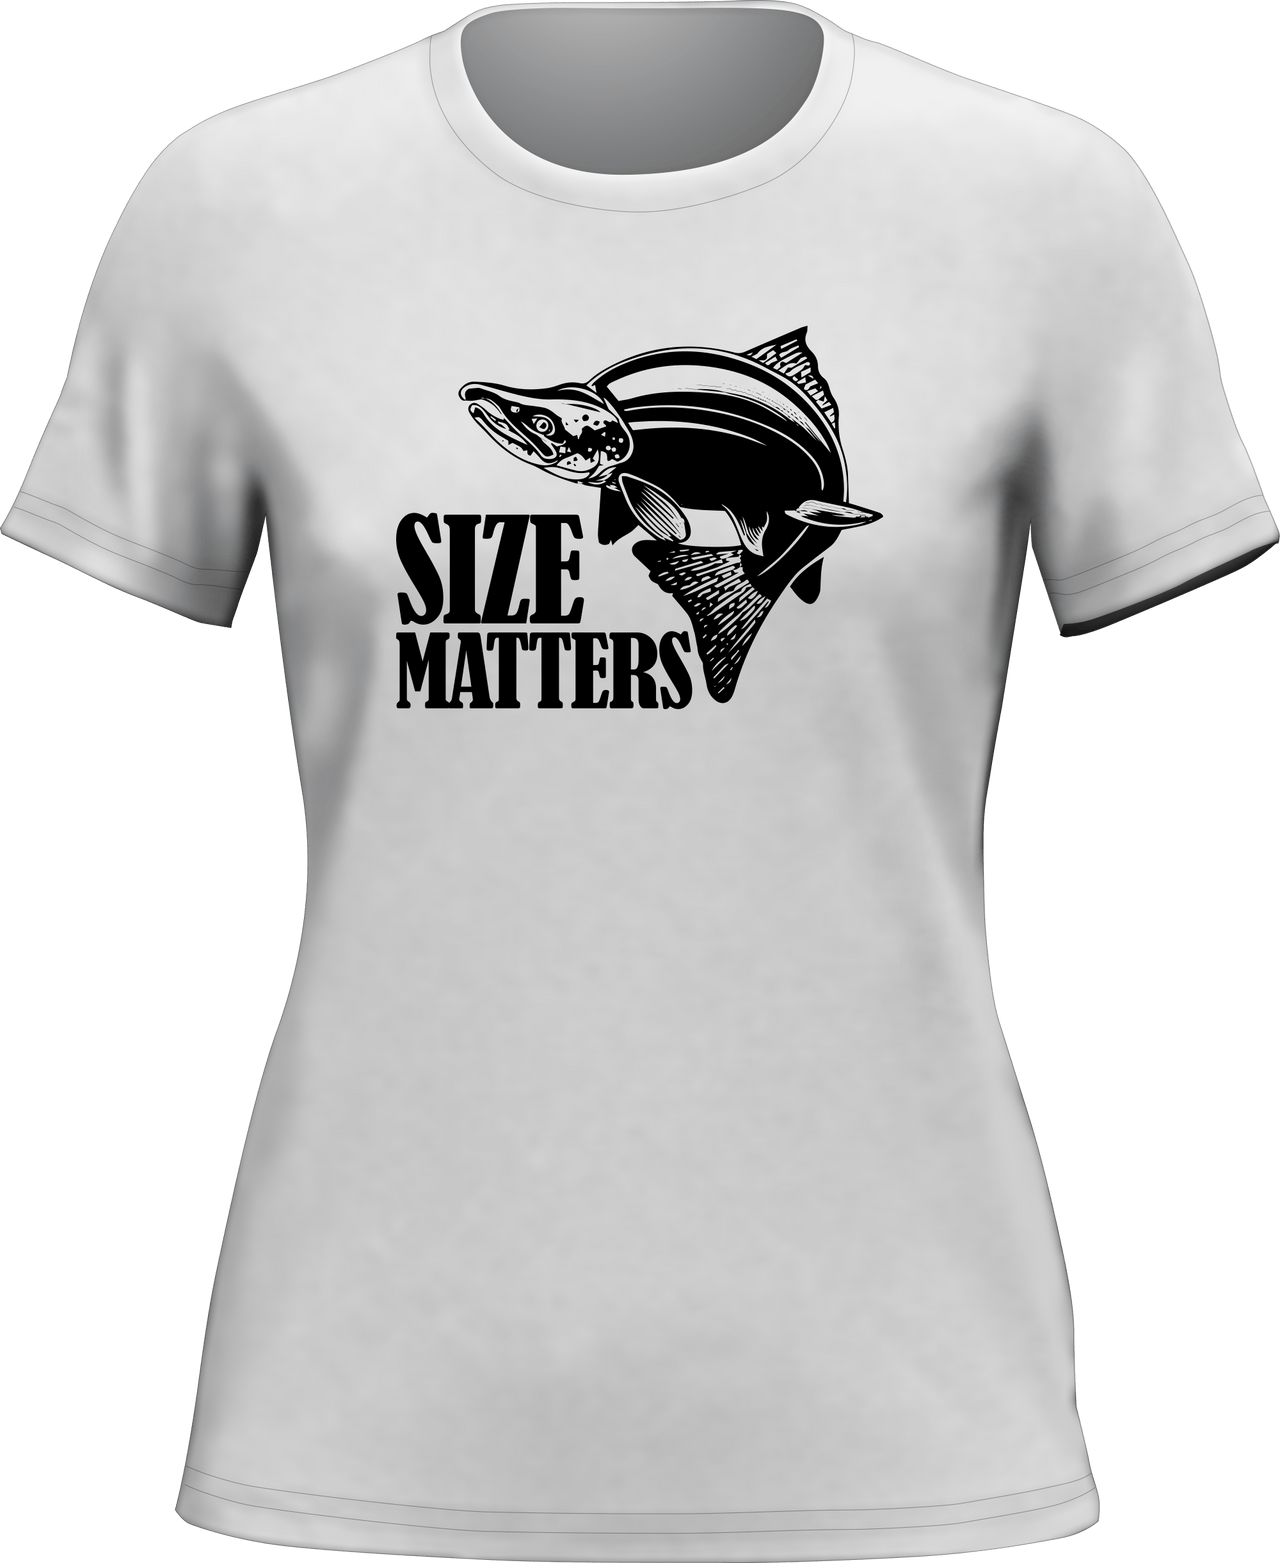 Size Matters T-Shirt for Women